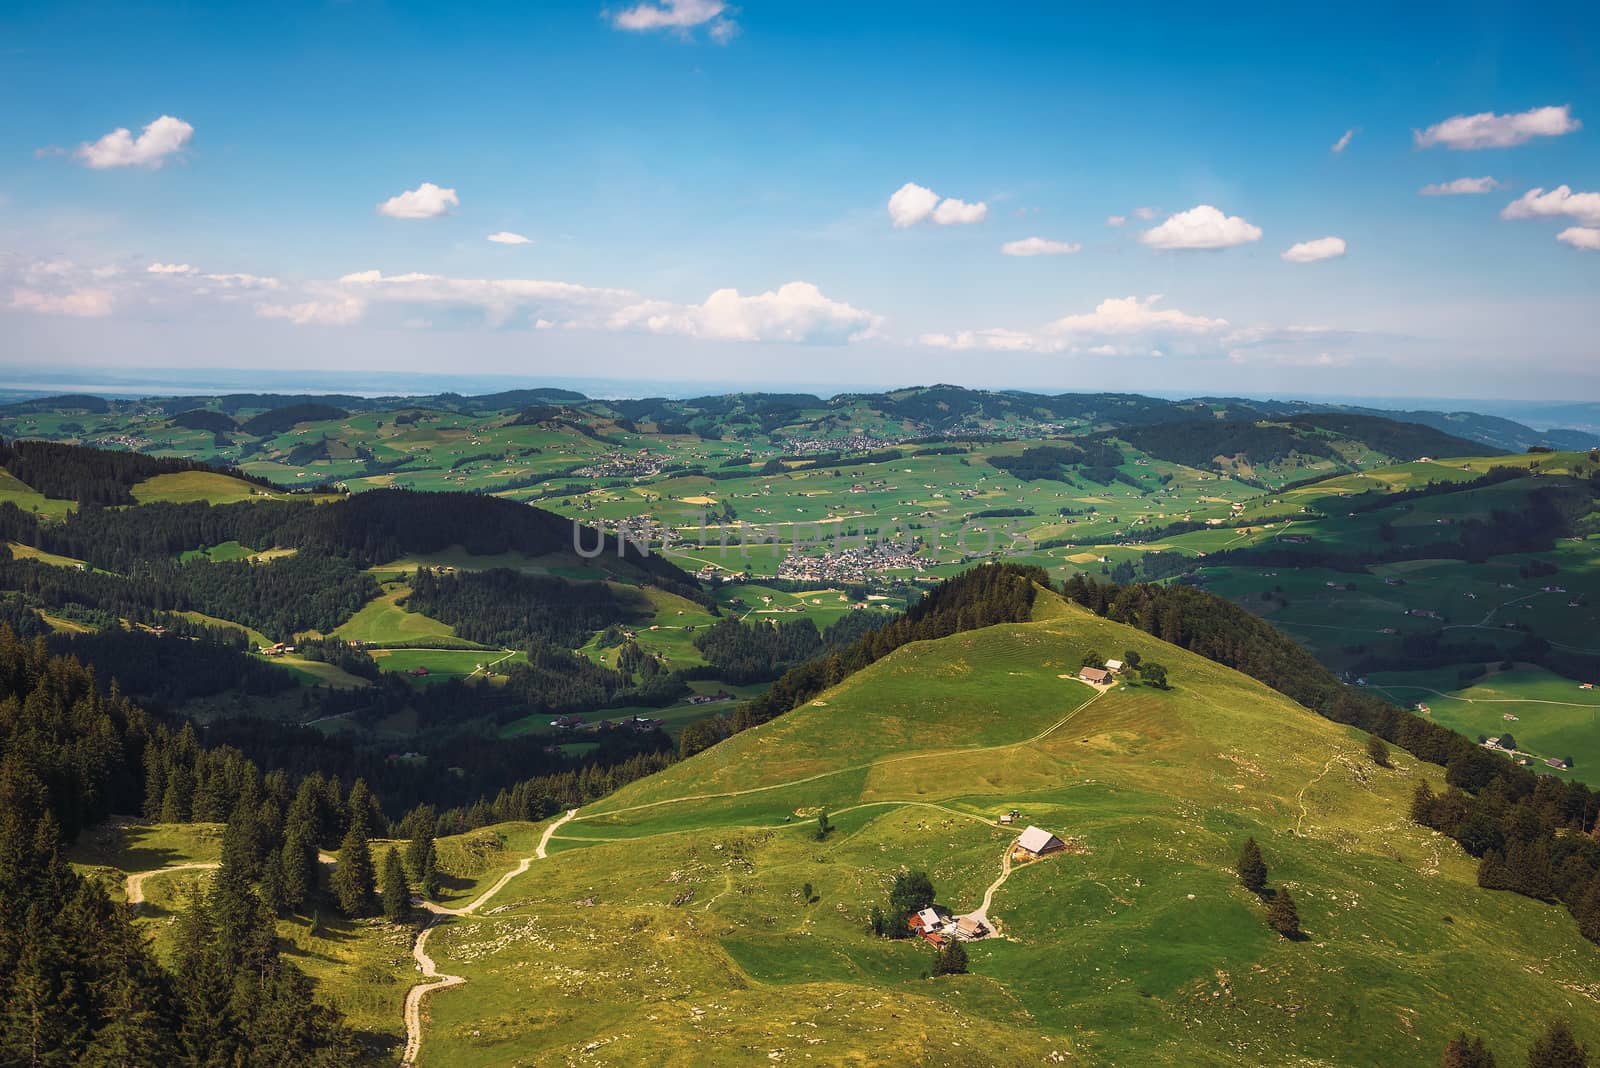 Panoramic views from the Ebenalp mountain in Switzerland by nickfox